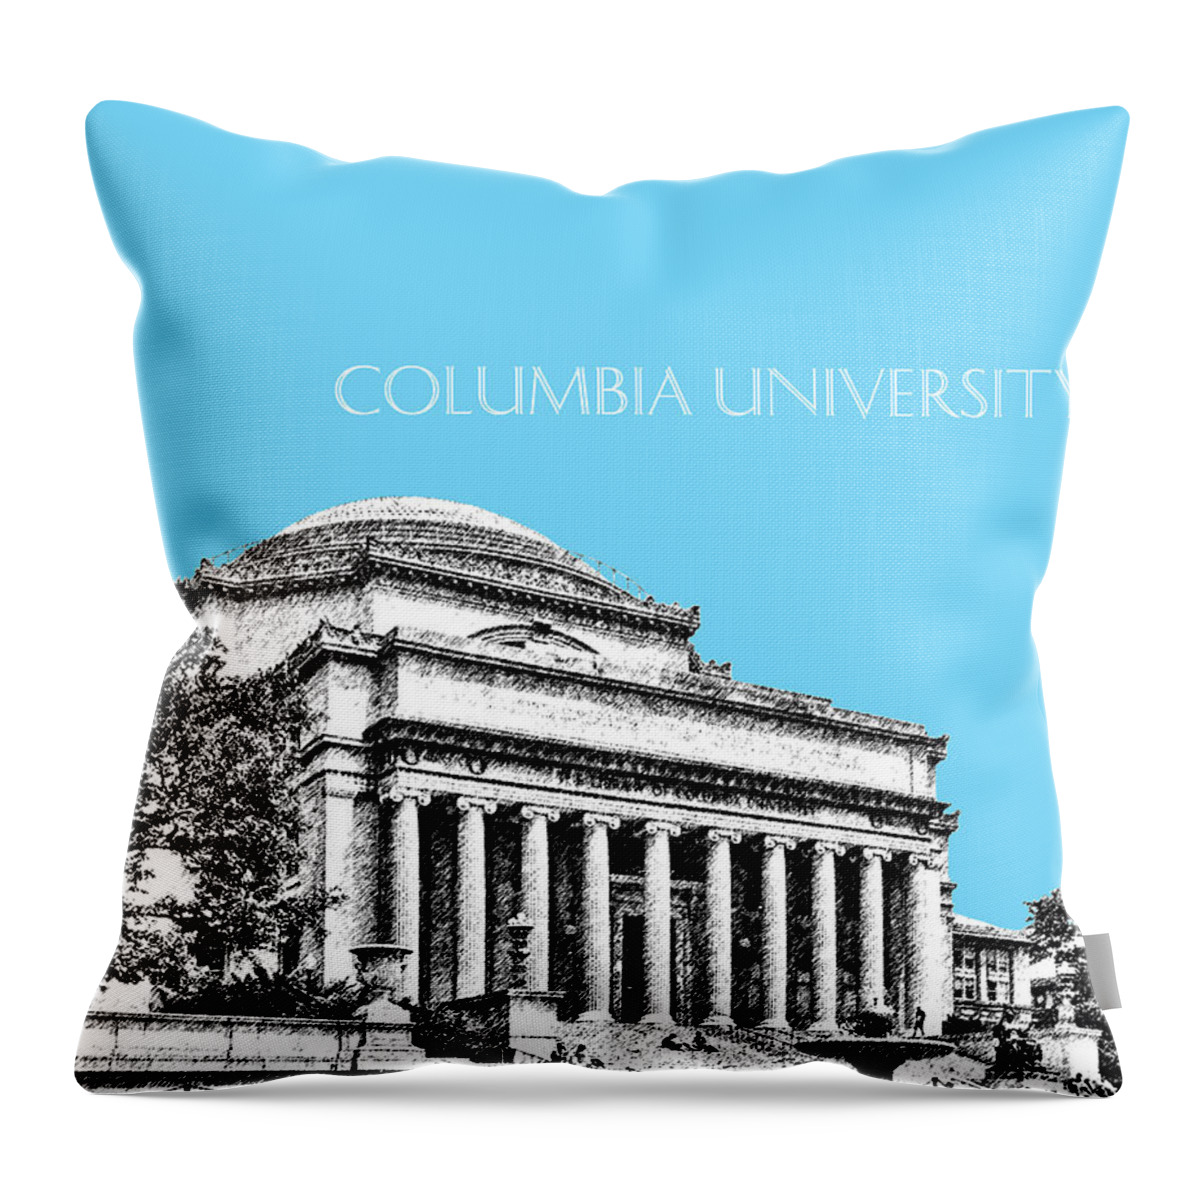 University Throw Pillow featuring the digital art Columbia University - Sky Blue by DB Artist